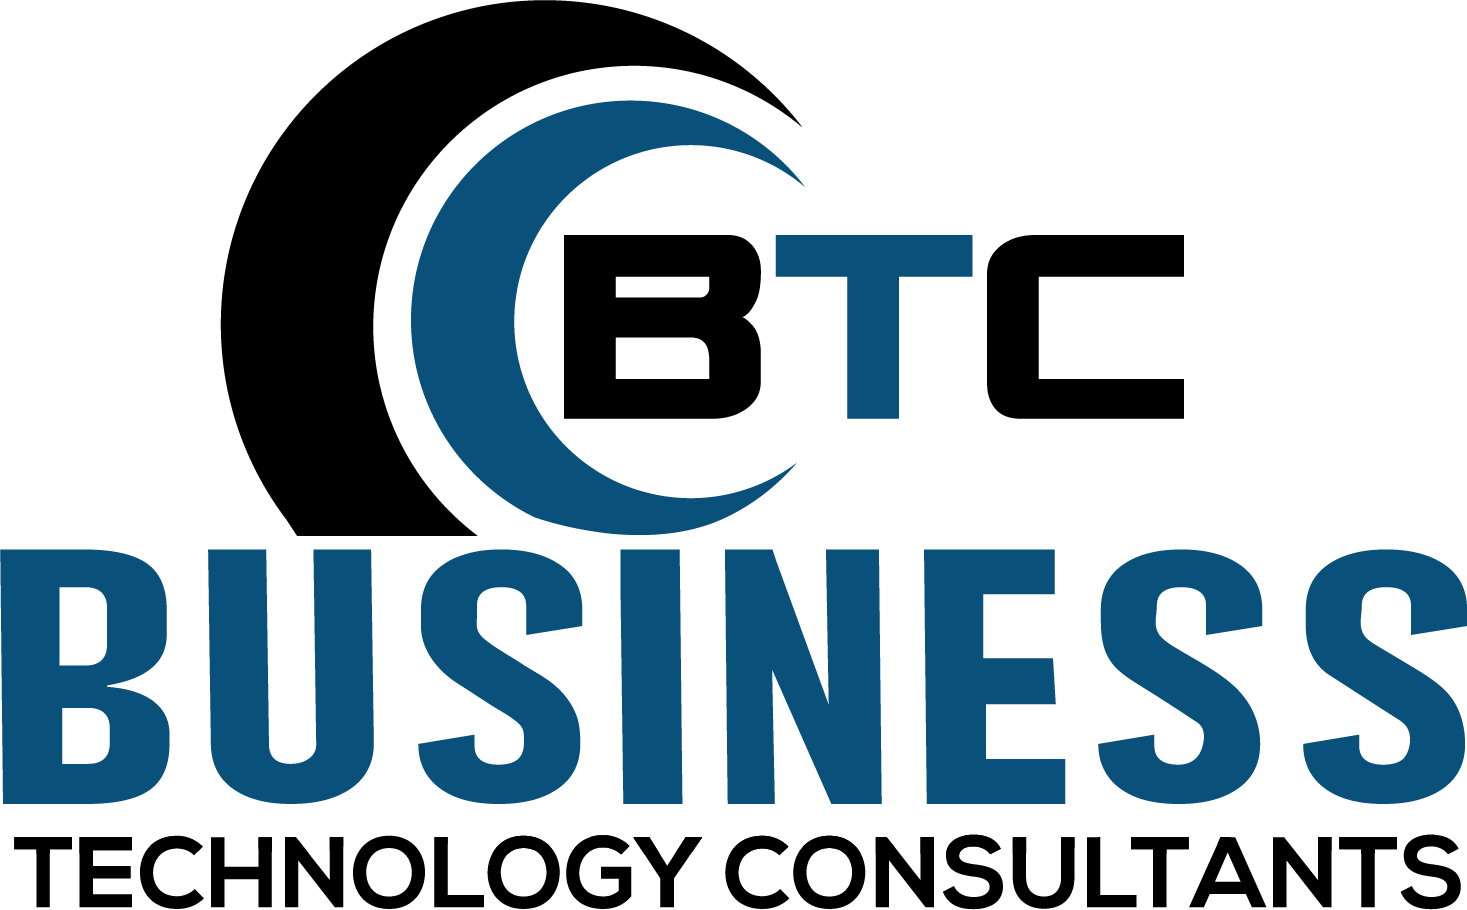 Business Technology Consultants, LLC Logo